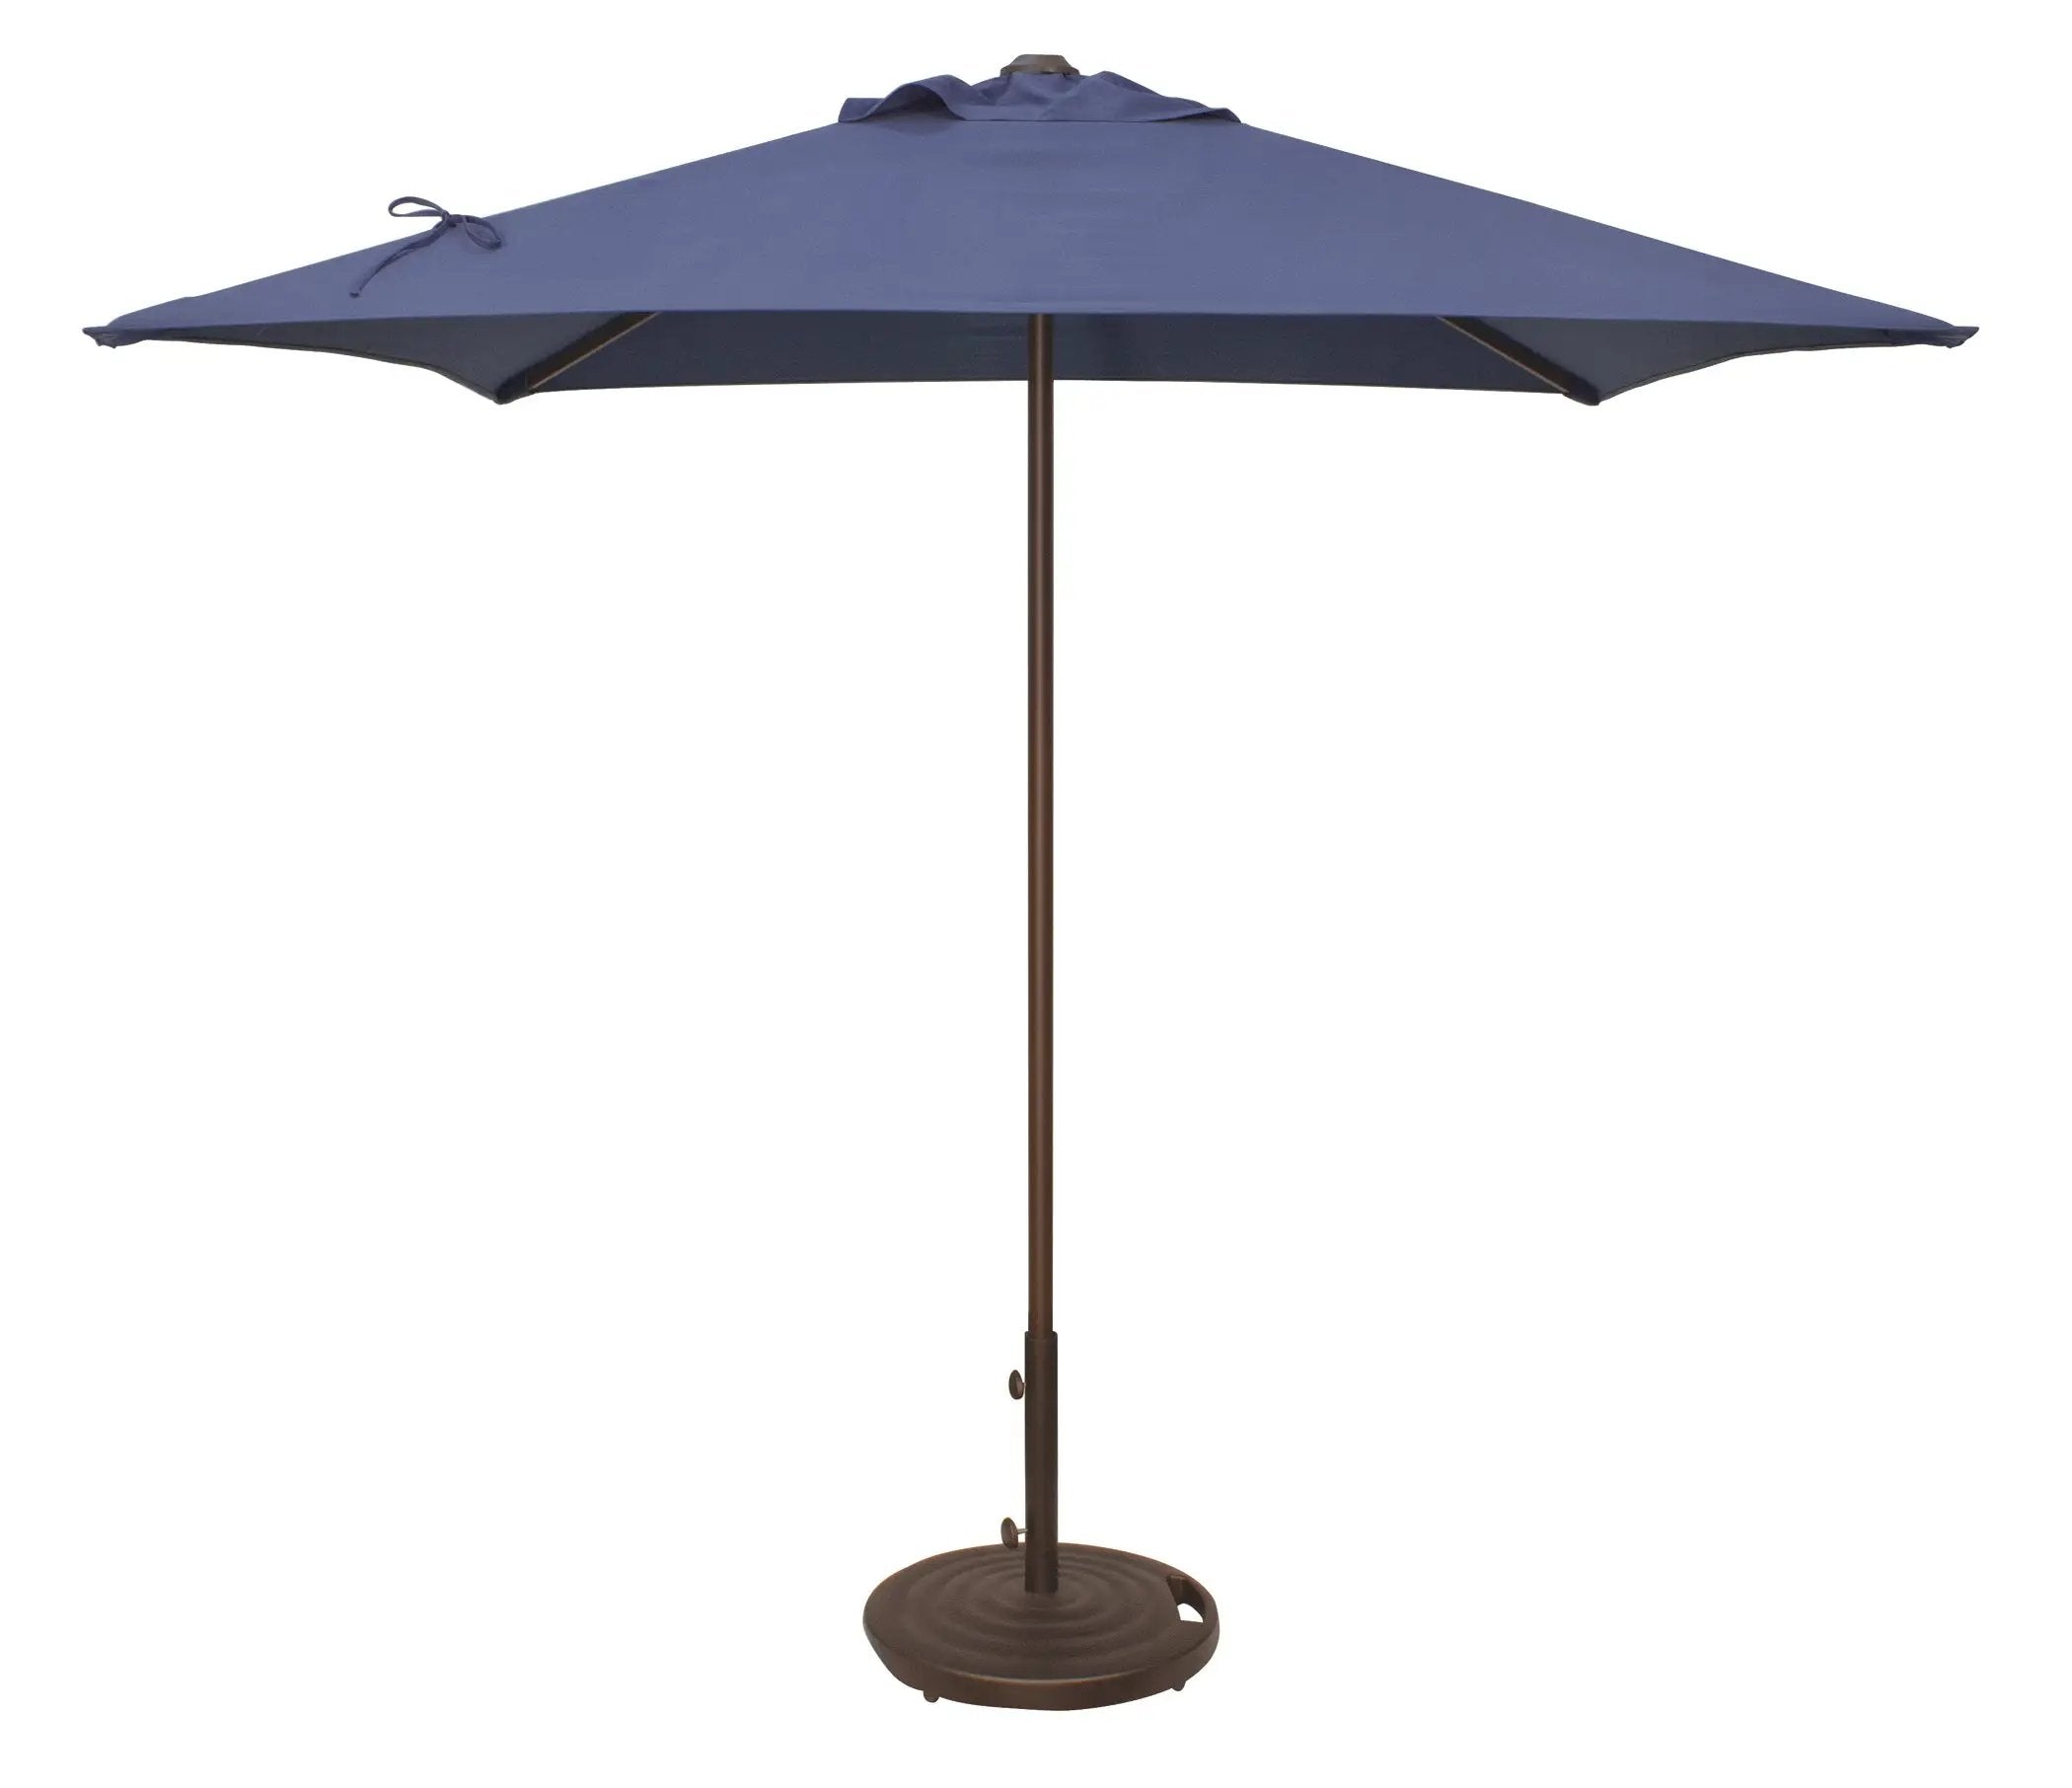 Square Commercial Umbrella